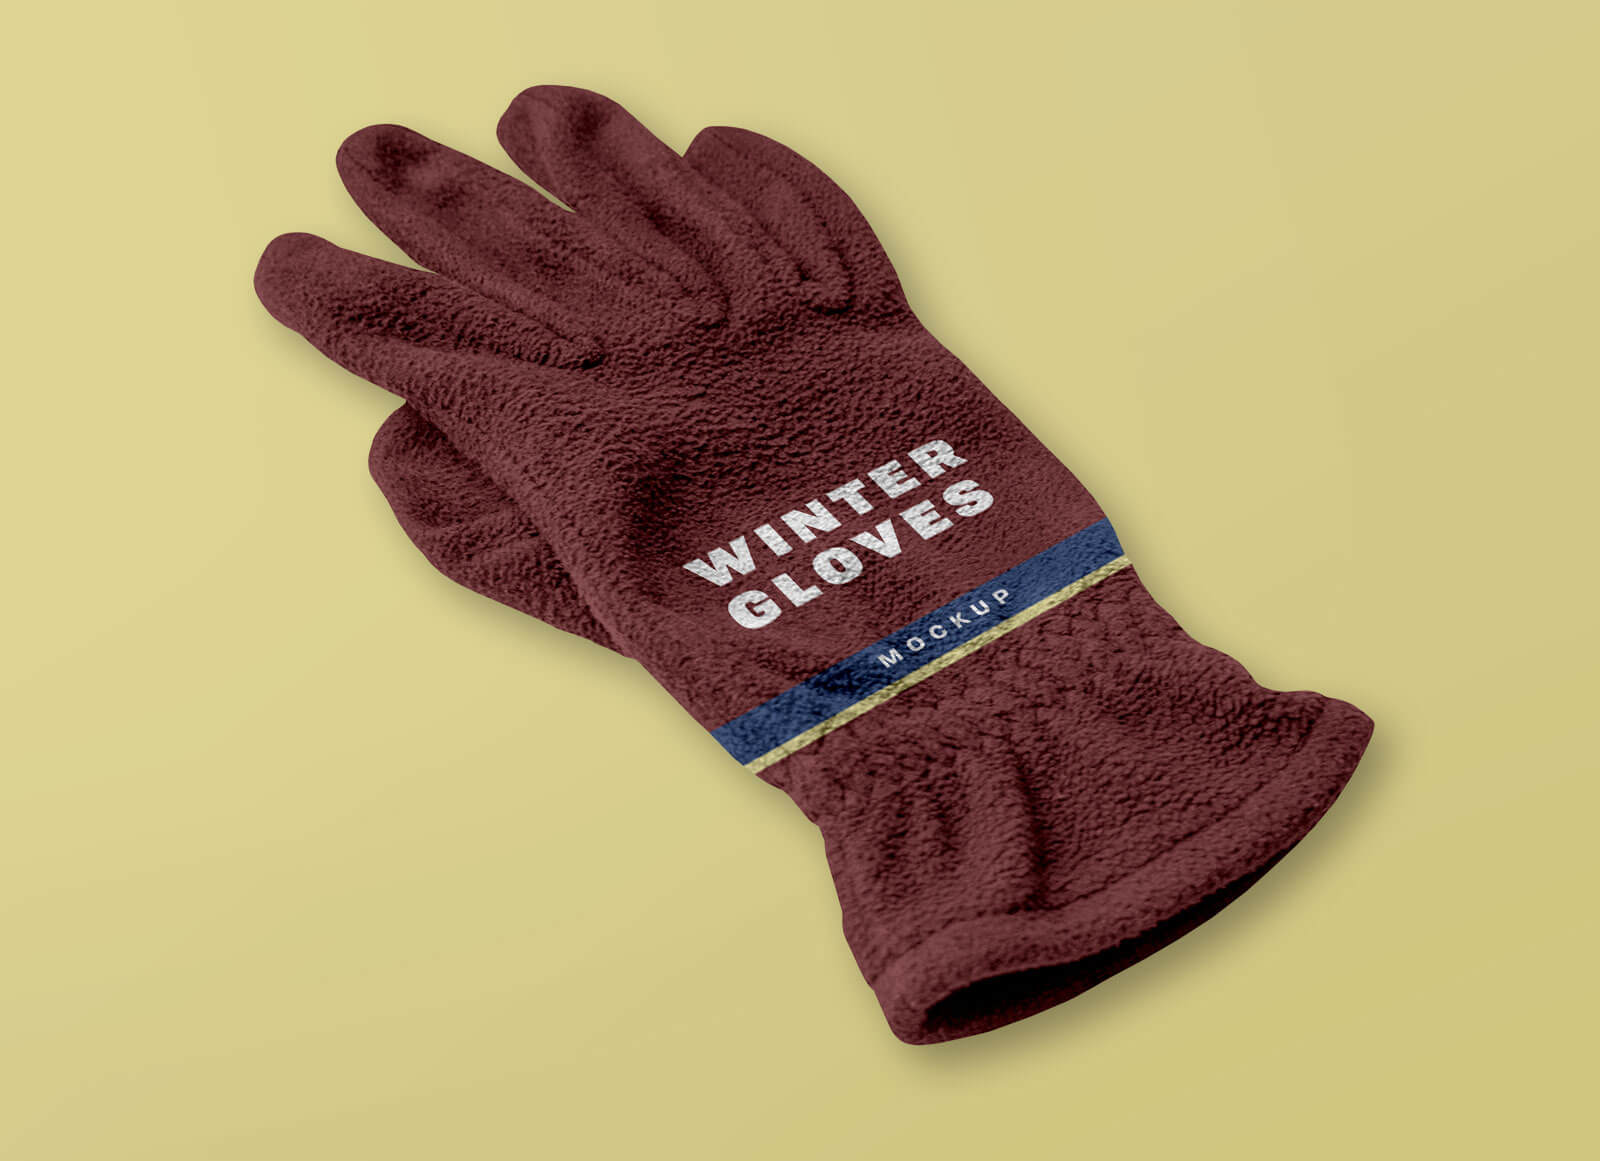 Free-Winter-Gloves-Mockup-PSD-Set